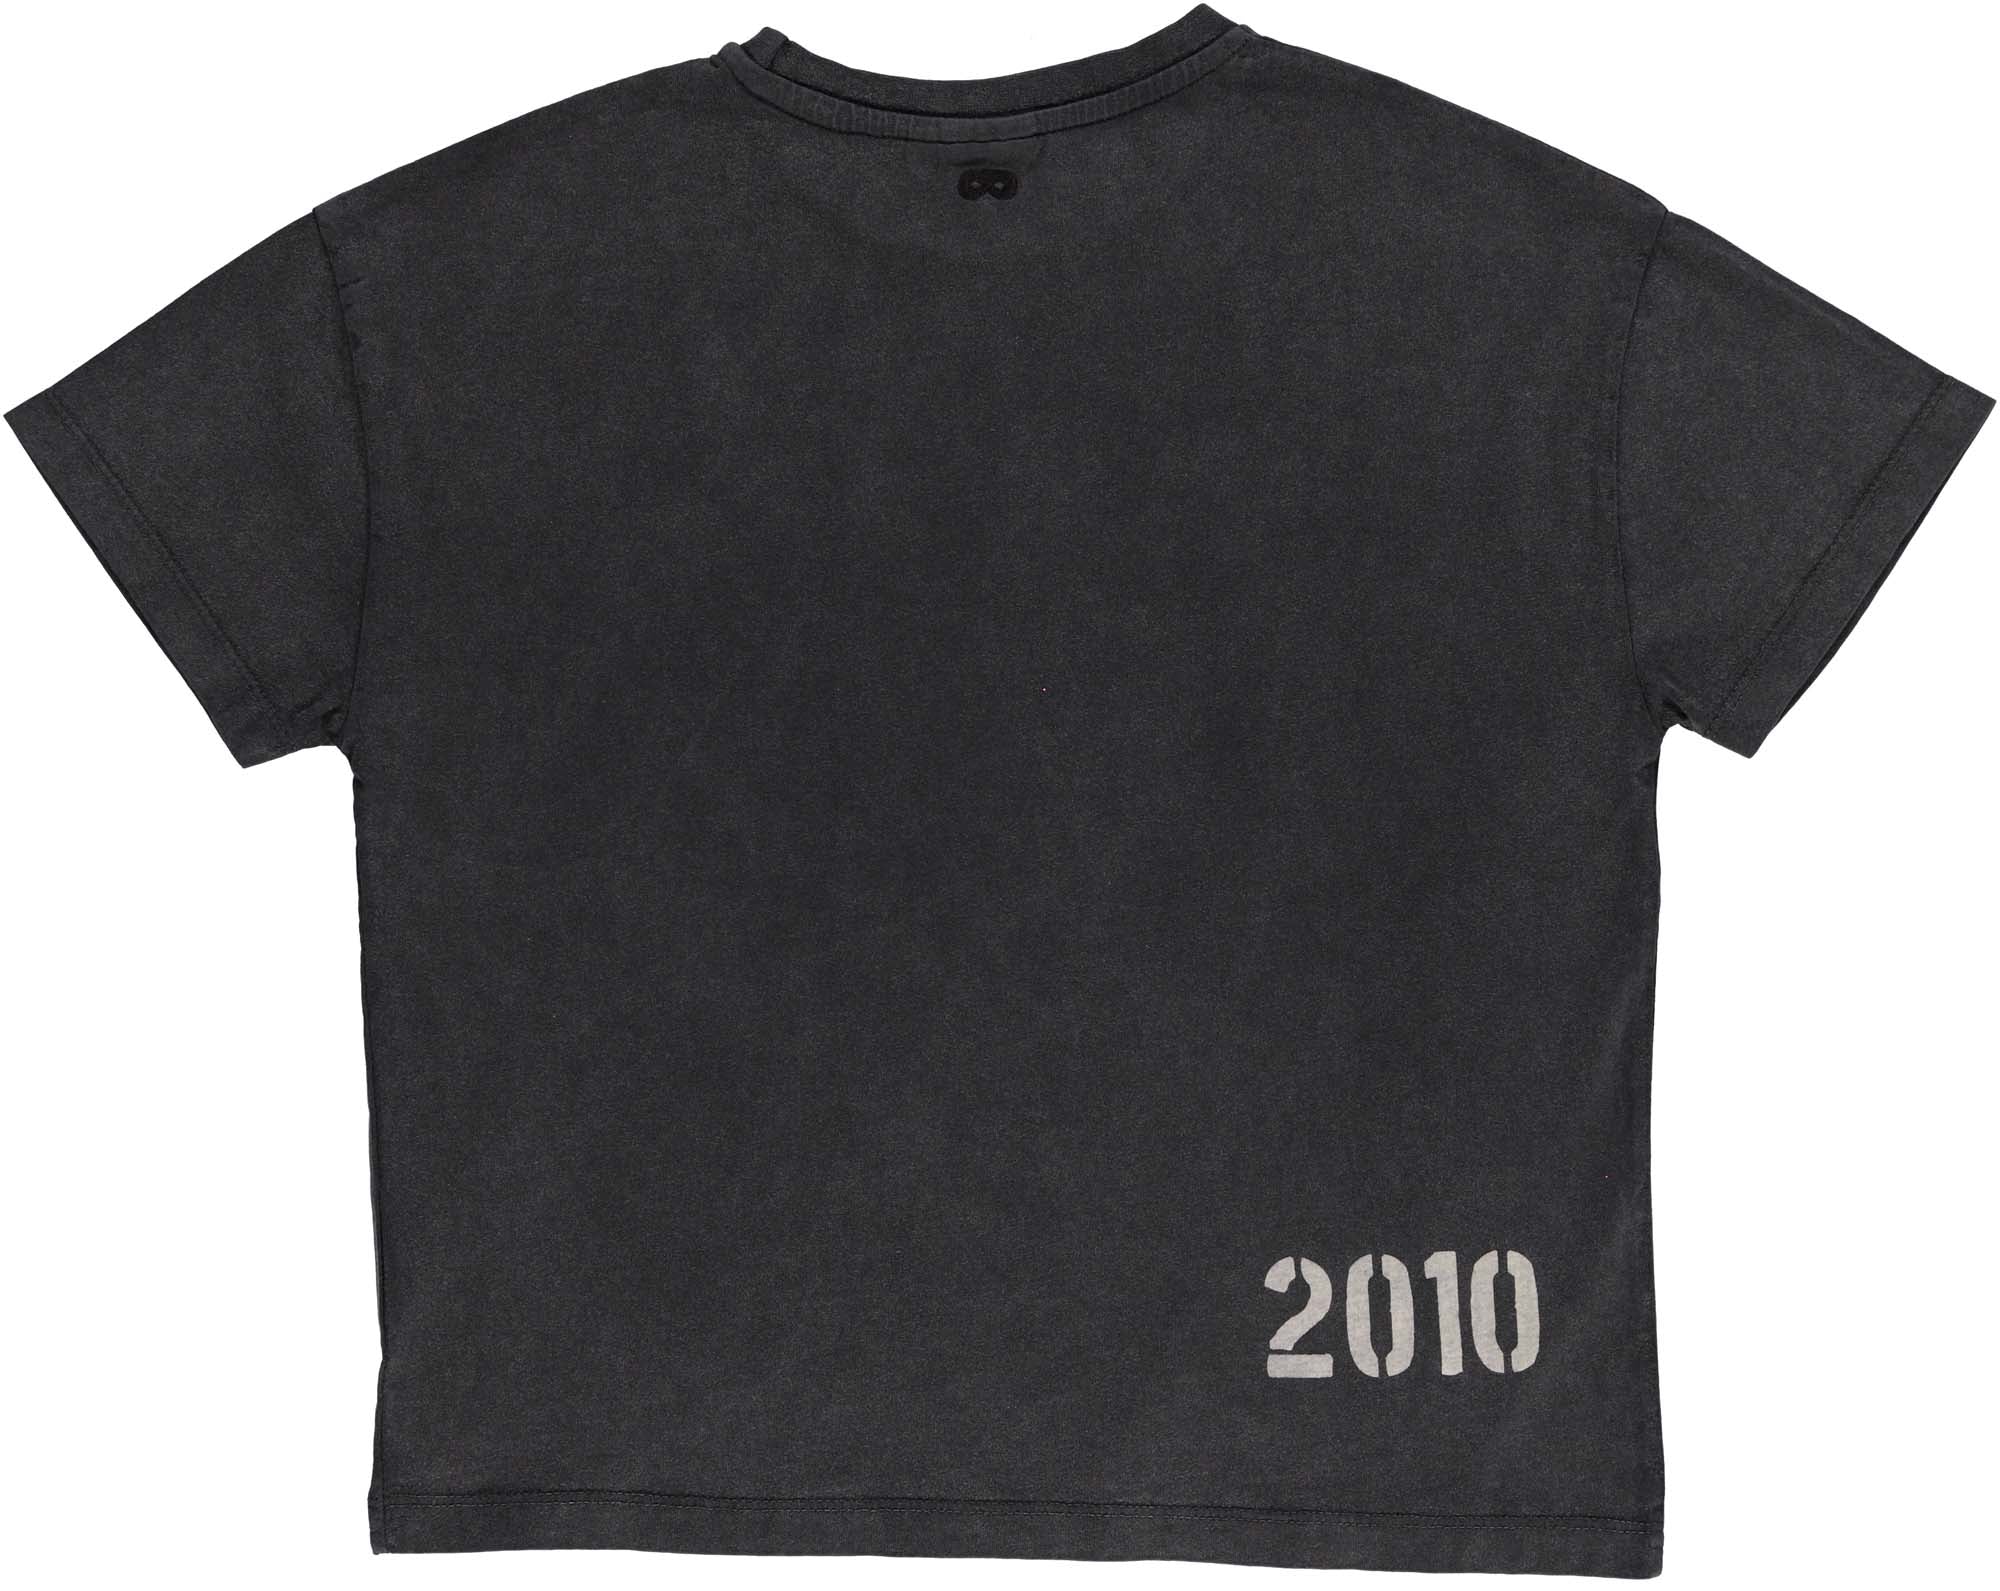 Black 'Swimming' T-shirt BL024